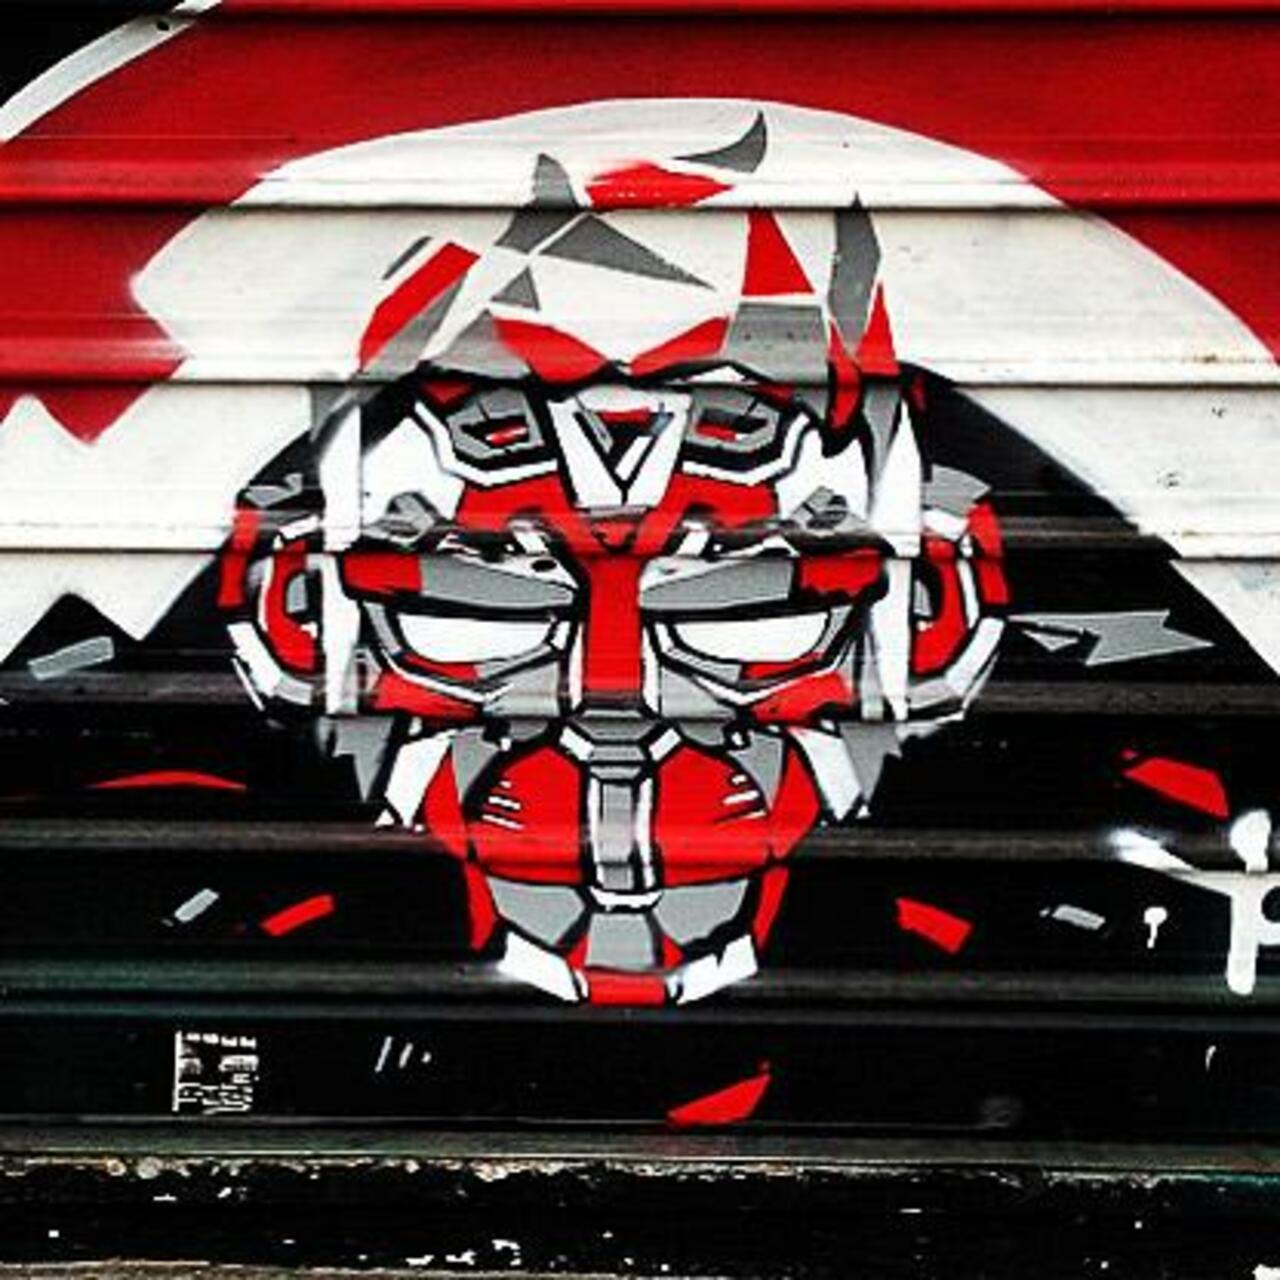 #Paris #graffiti photo by cilougram http://ift.tt/1PpdHDK #StreetArt http://t.co/dHOM828jRE https://goo.gl/t4fpx2